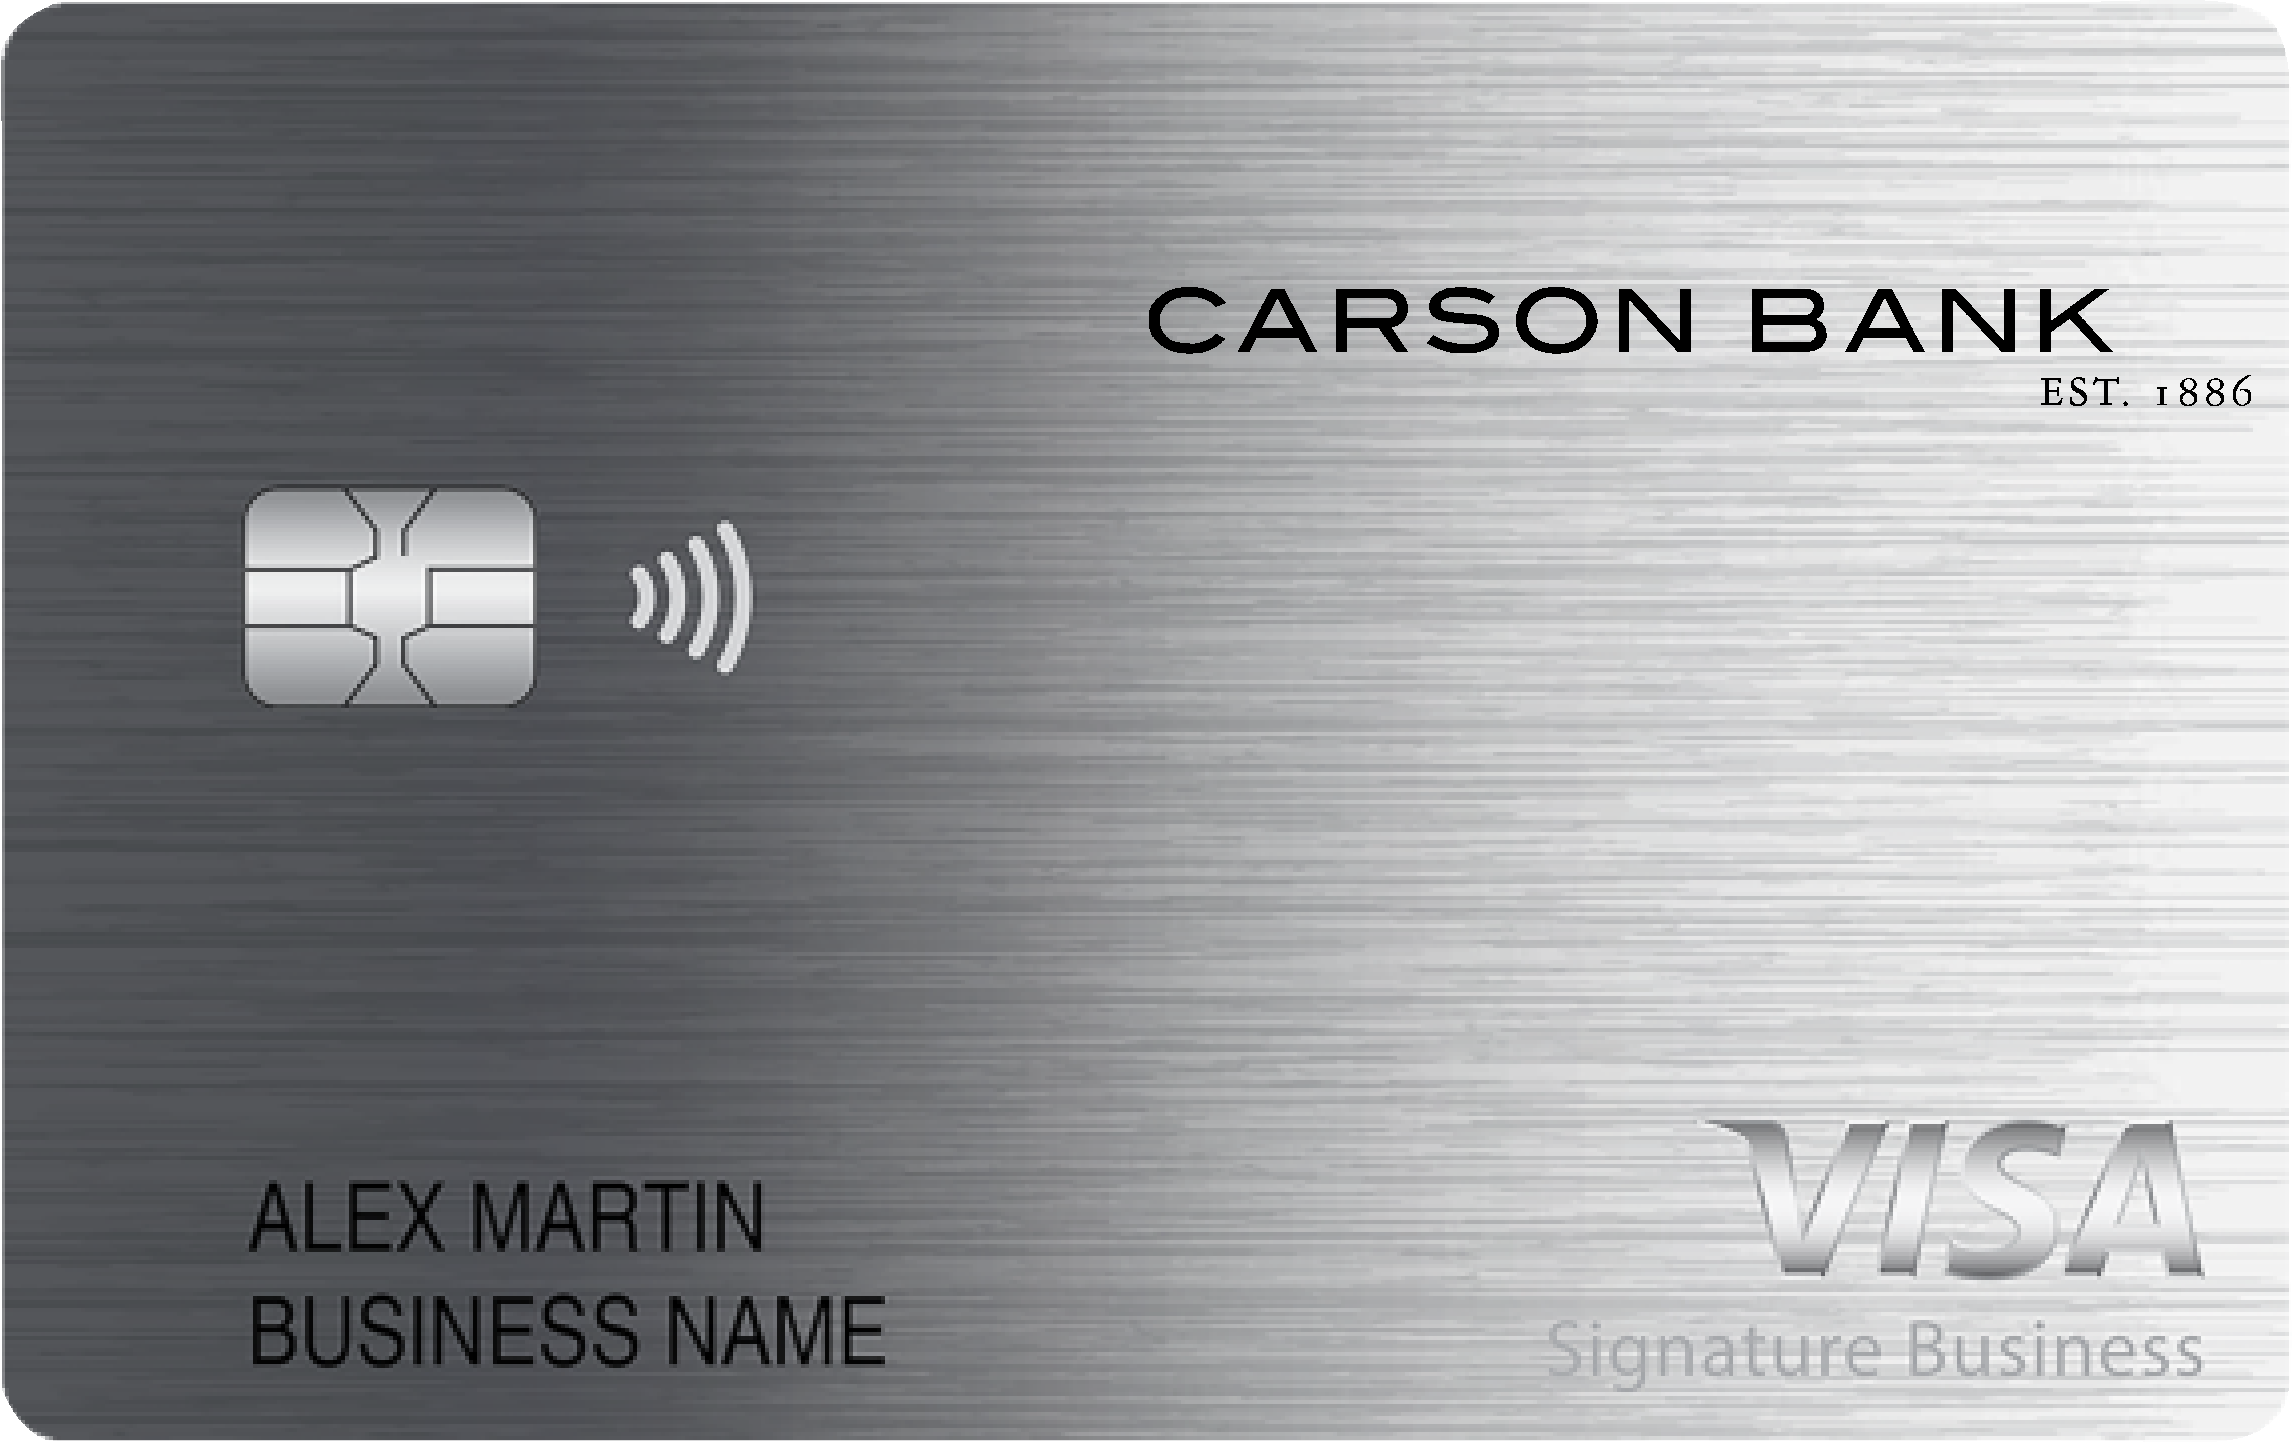 Carson Bank Smart Business Rewards Card